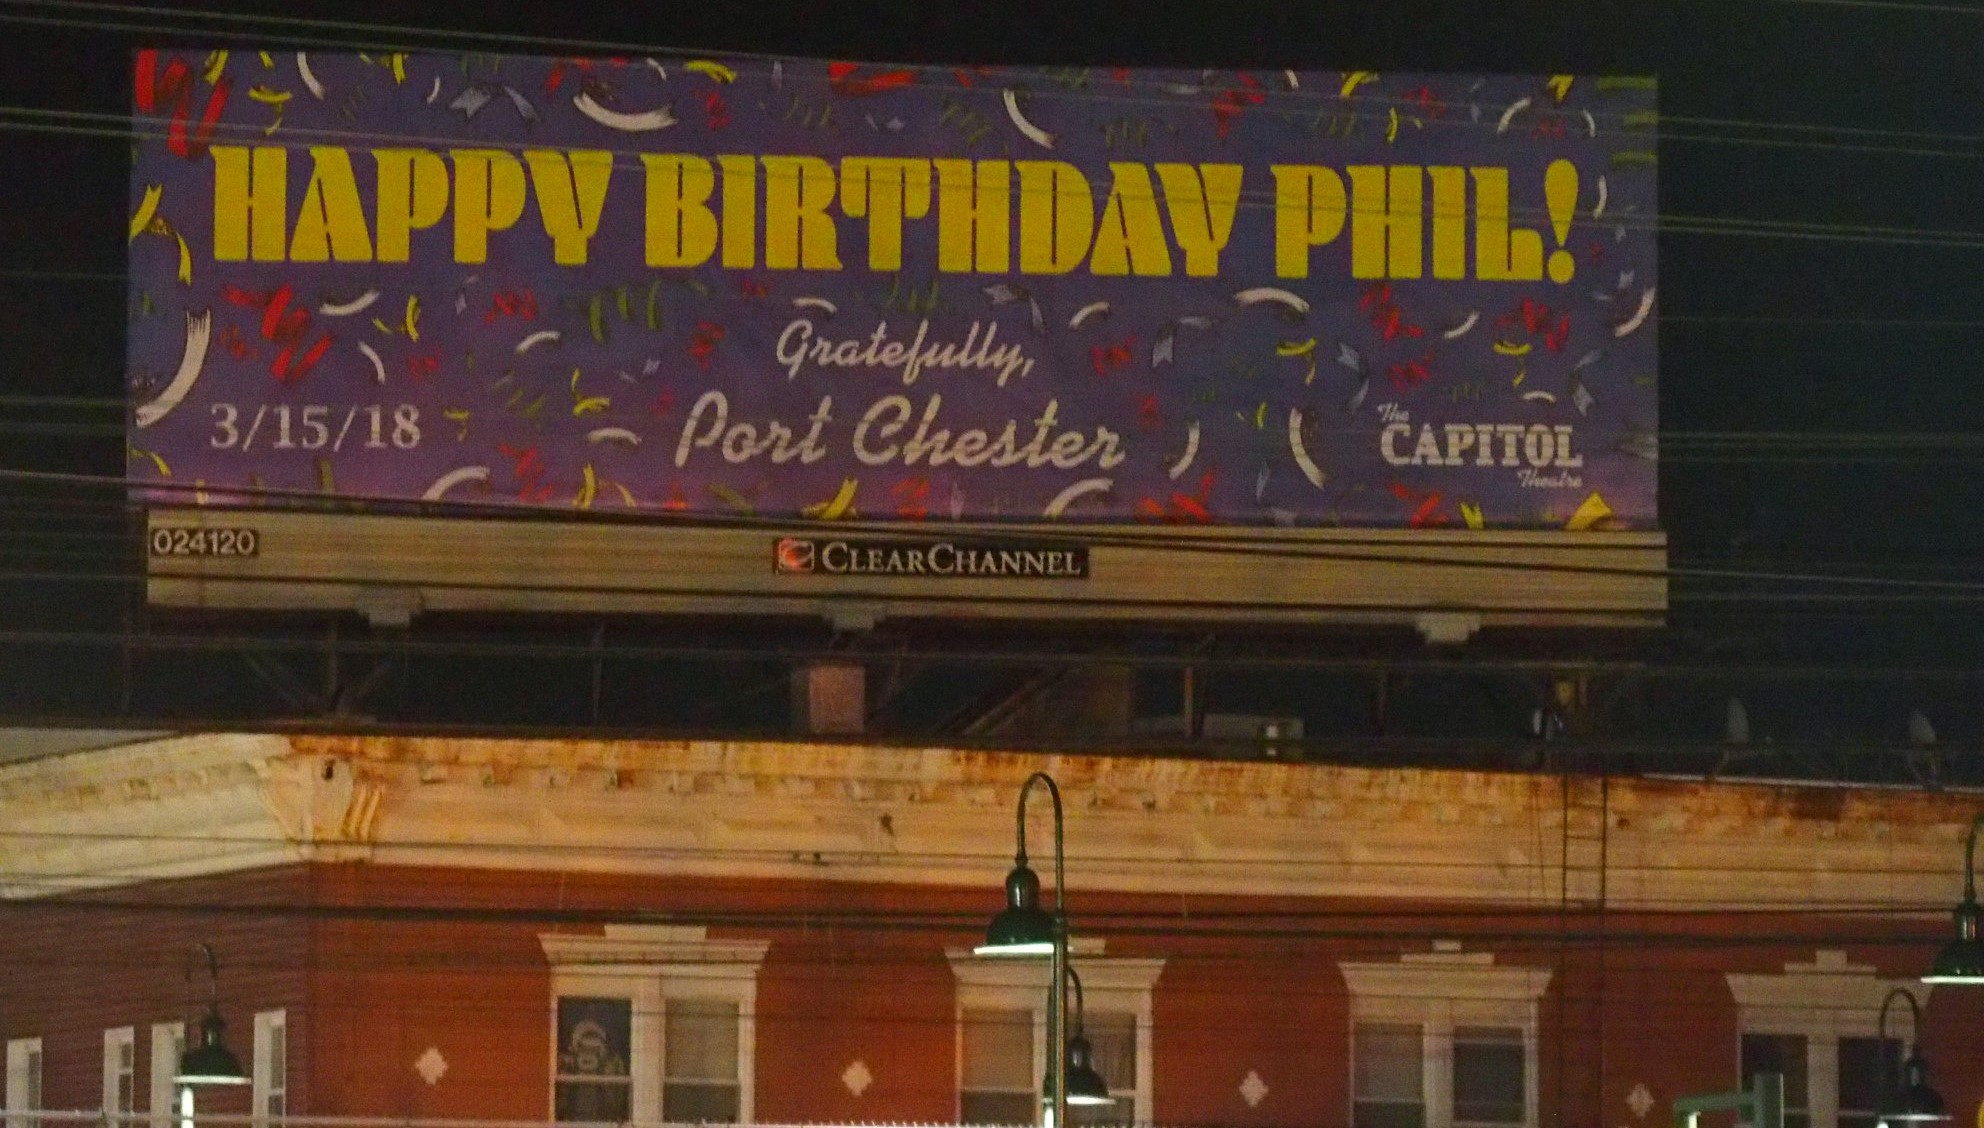 Port Chester, New York wishing Phil a Happy 78th Birthday!